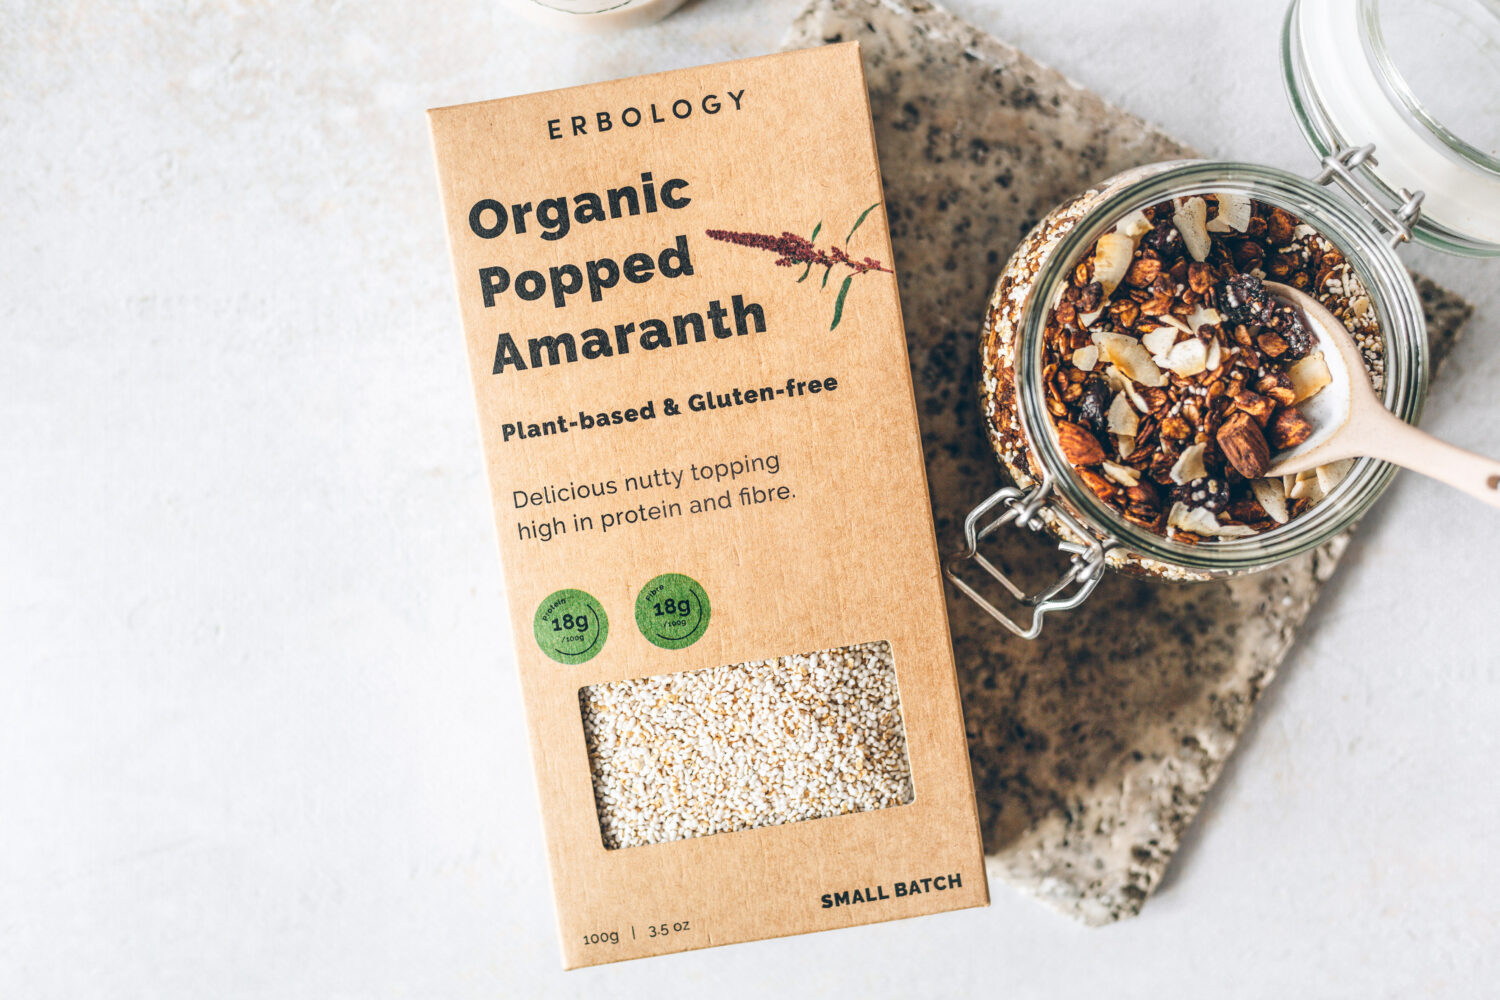 Organic Popped Amaranth